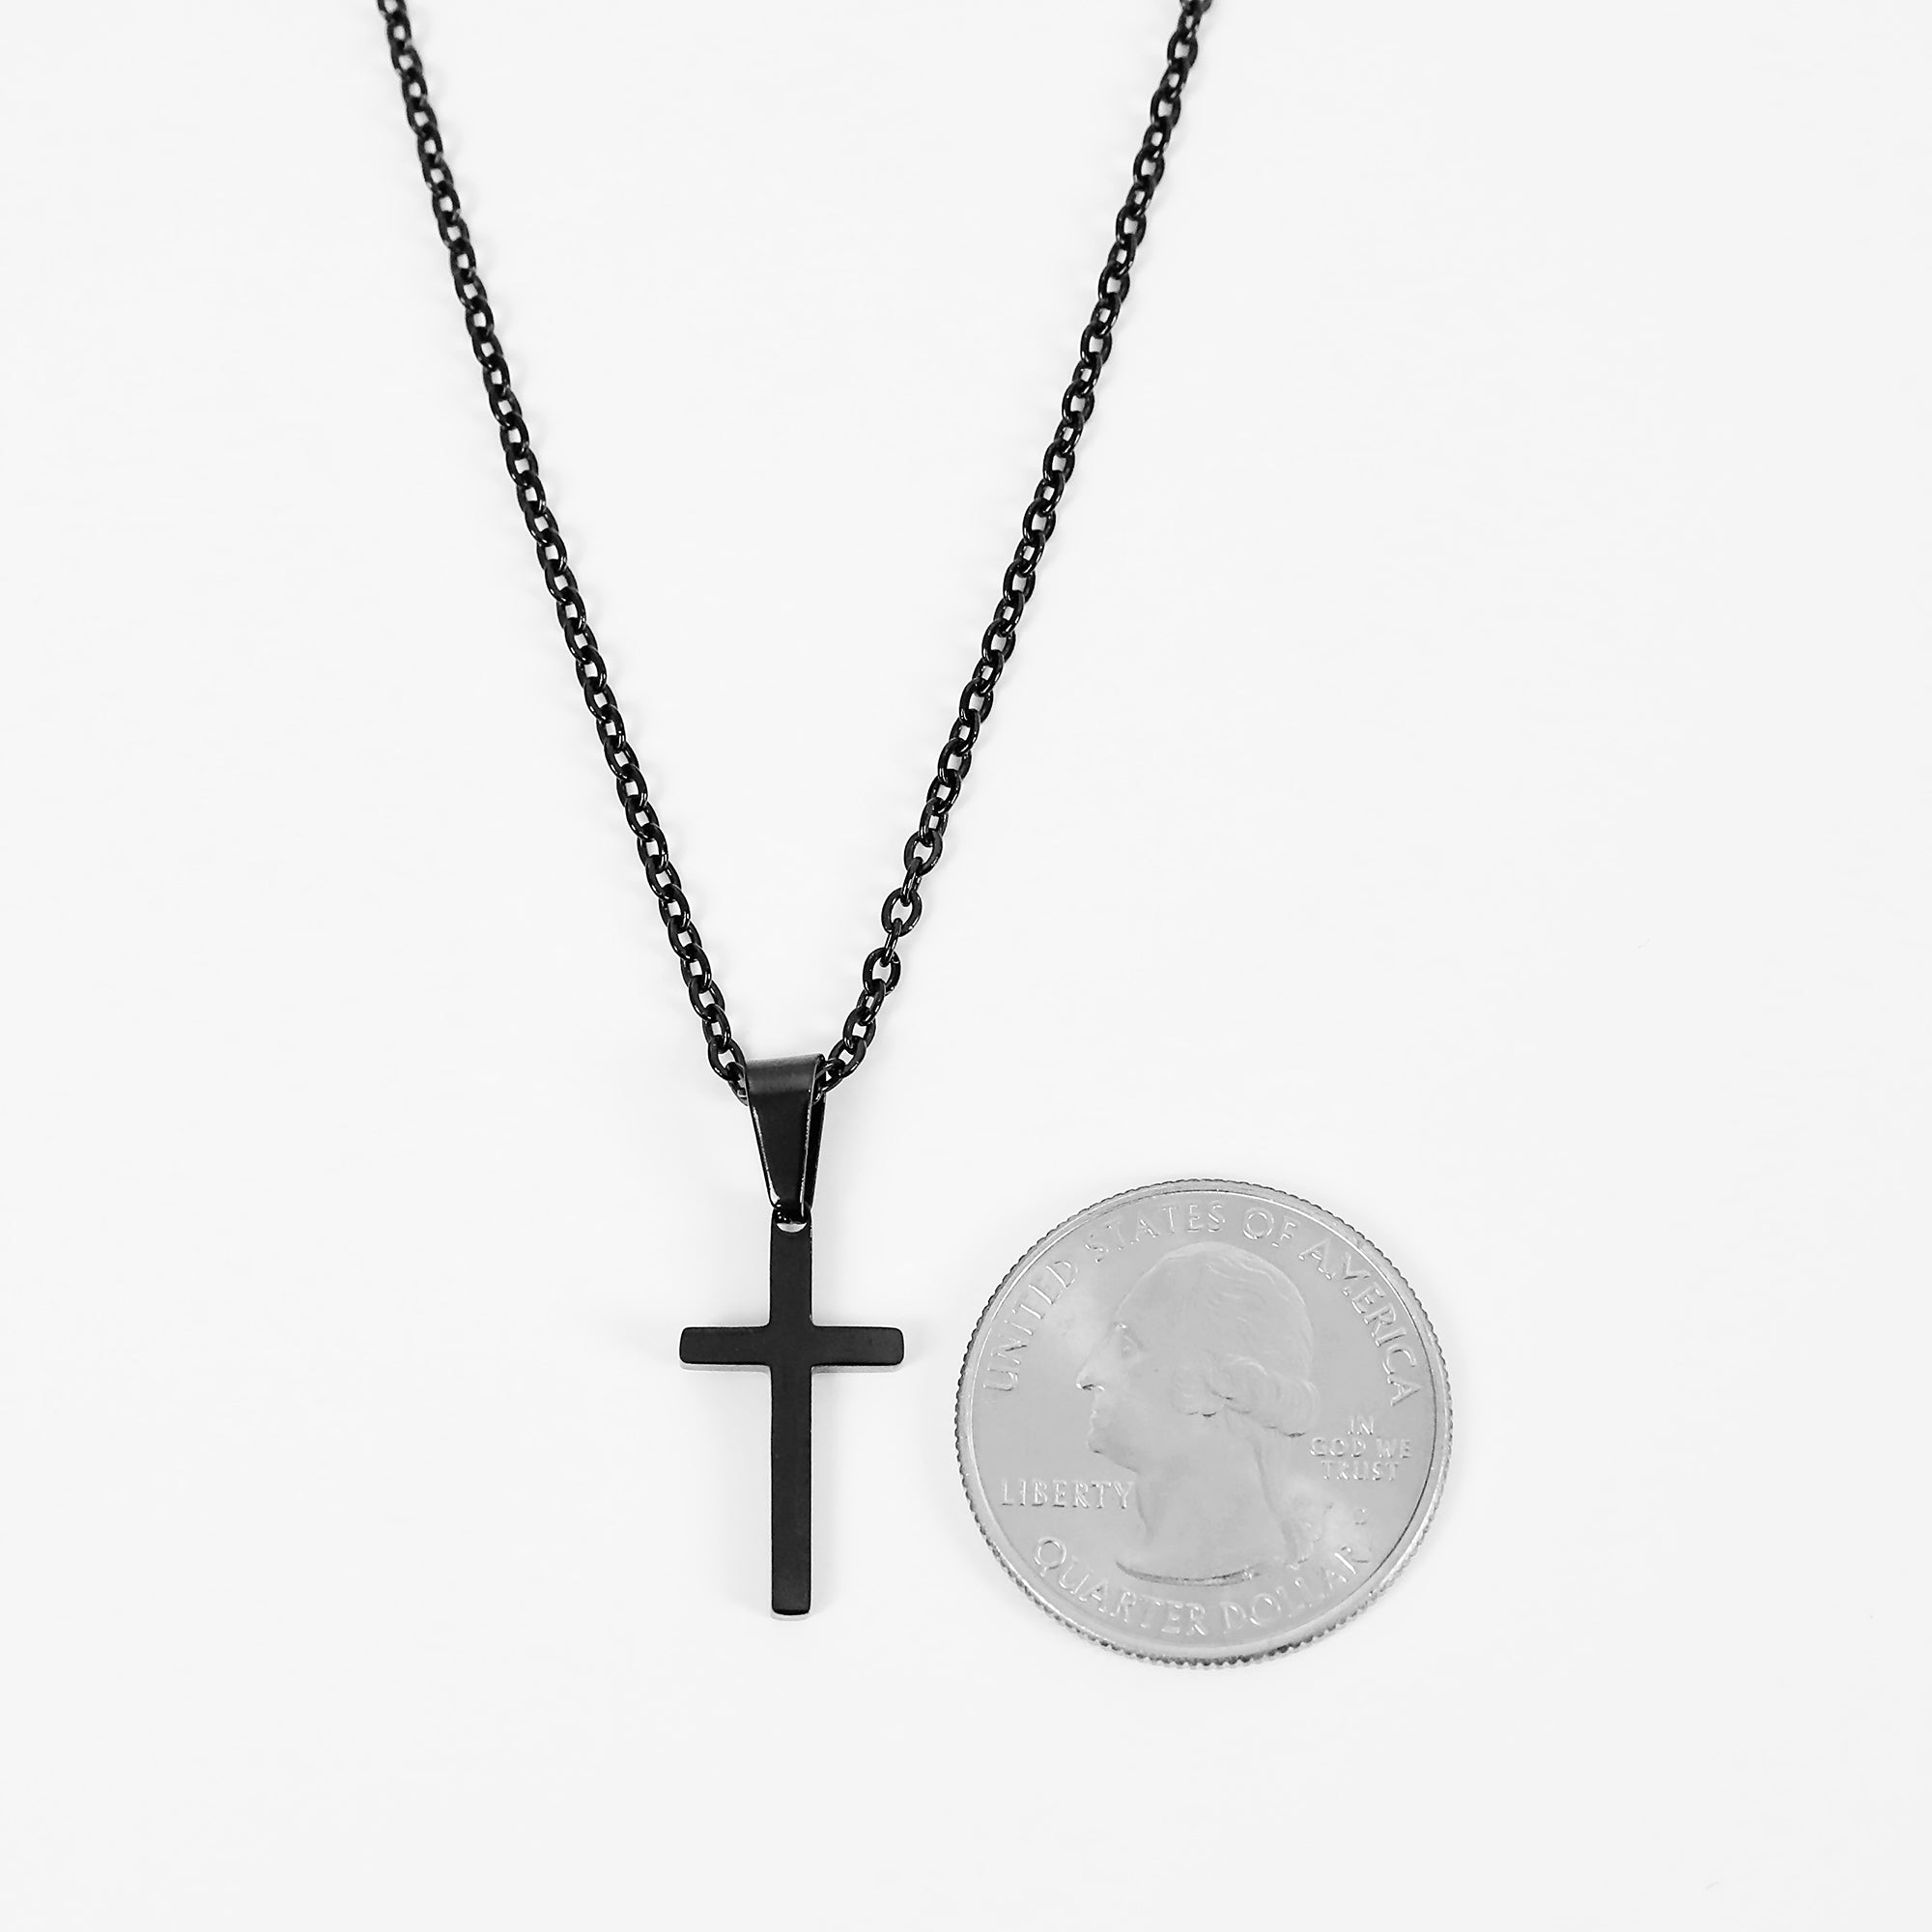 Small Modern Cross Necklace - Black